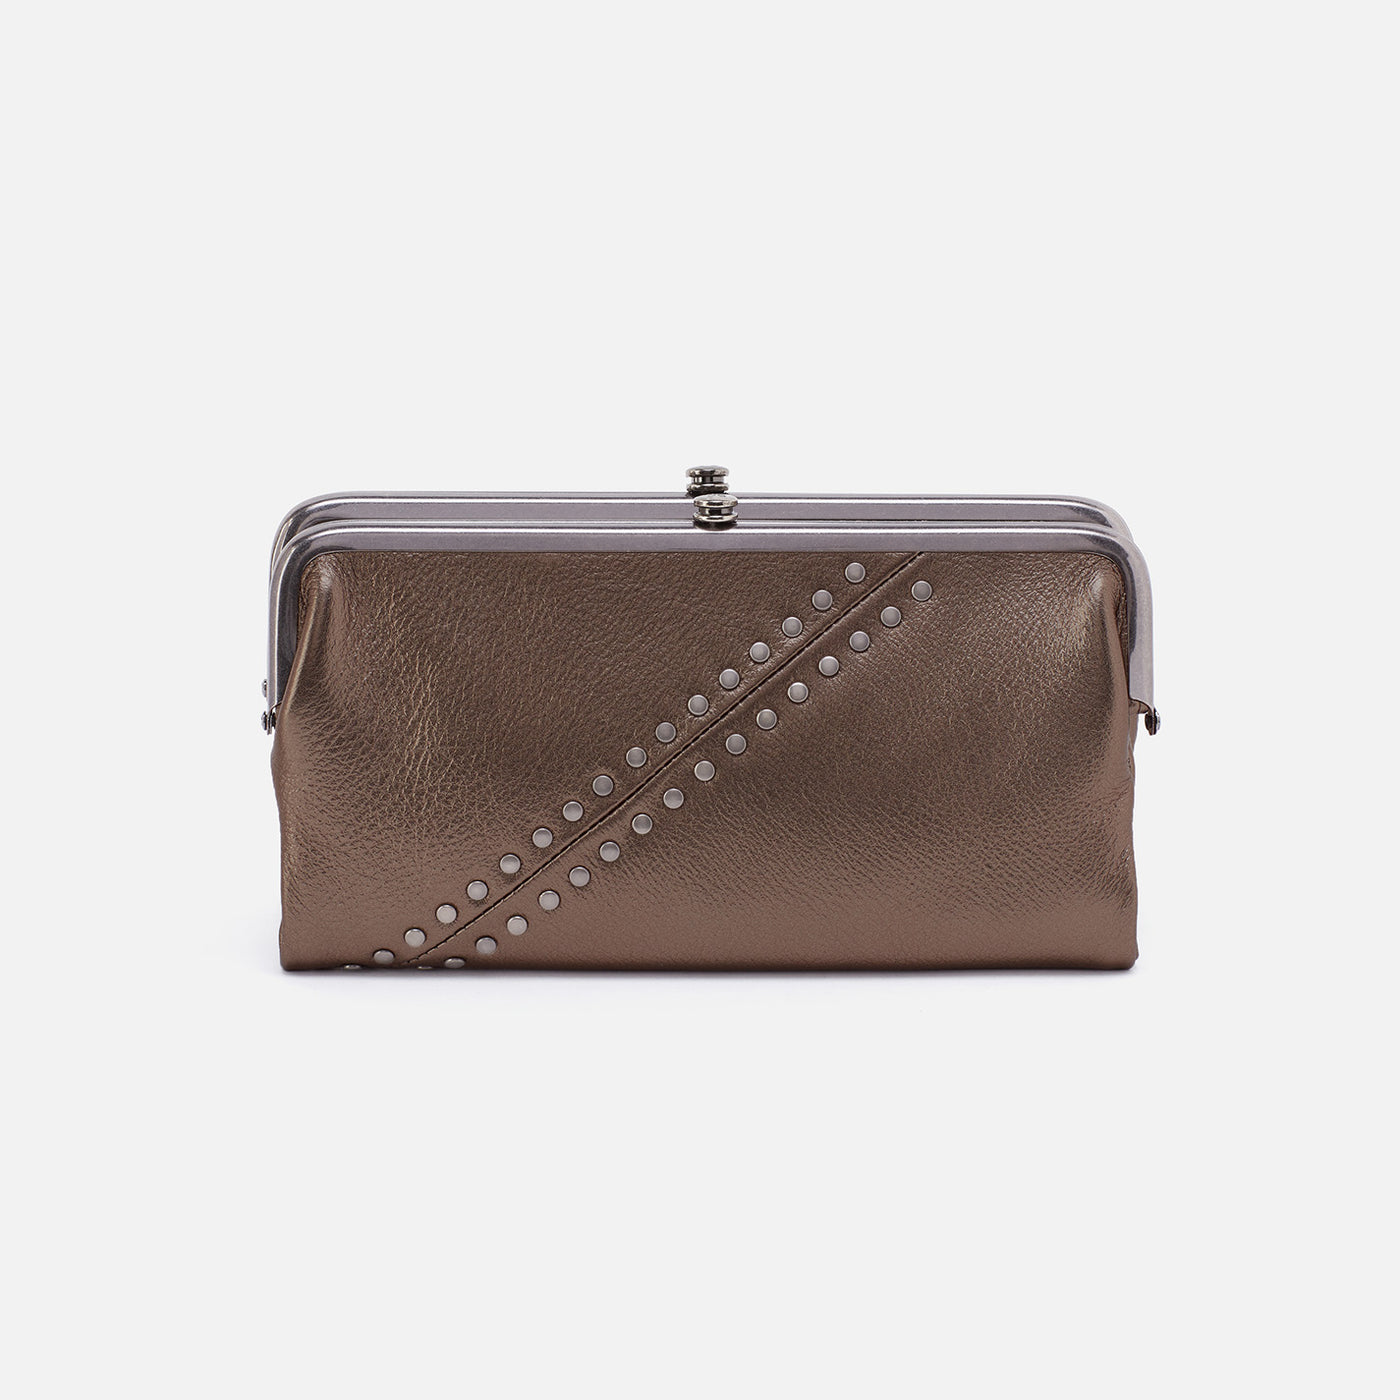 Hobo International Leather Honor Zip Around Compact Clutch Wallet Mink -  Travel Trek Luggage & Travel Gear